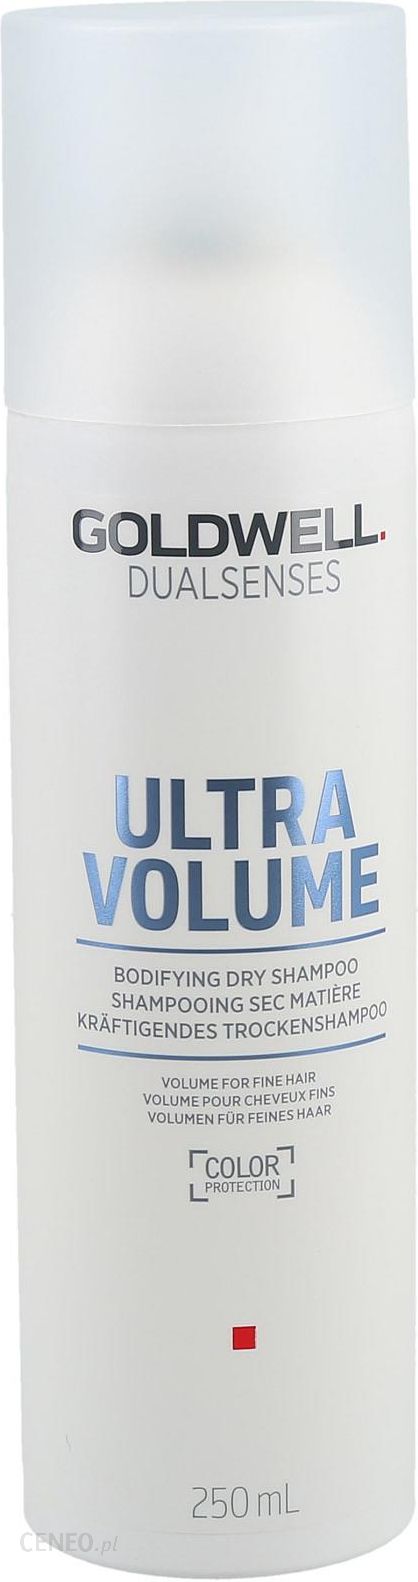 goldwell dualsenses ultra volume suchy szampon